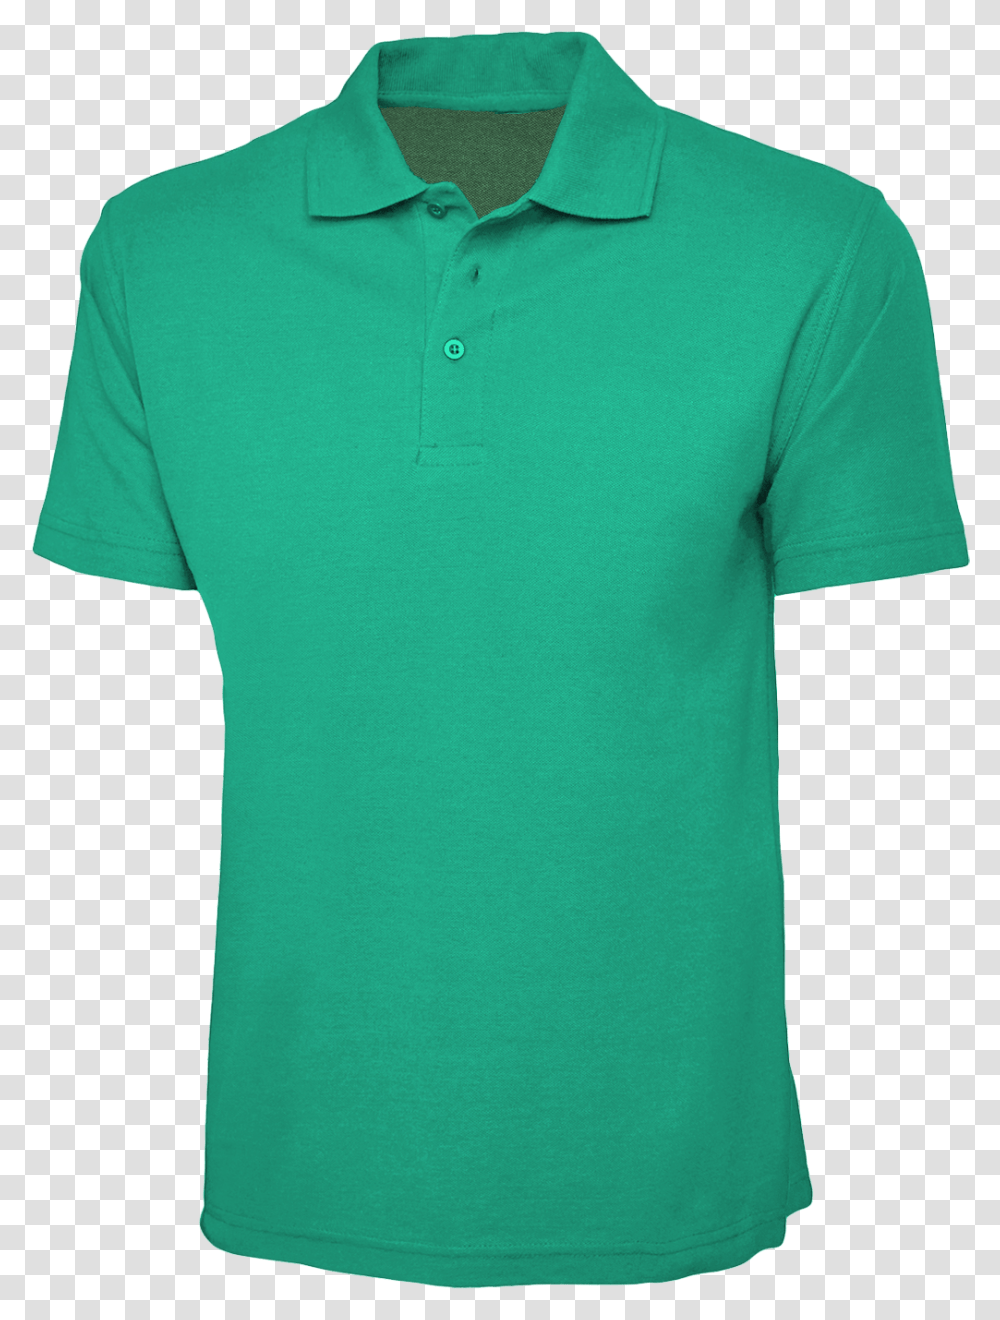 Plain Dark Grey Polo Shirt Cartoons Mint Green Polo Shirt Plain, Apparel, Sleeve, T-Shirt Transparent Png